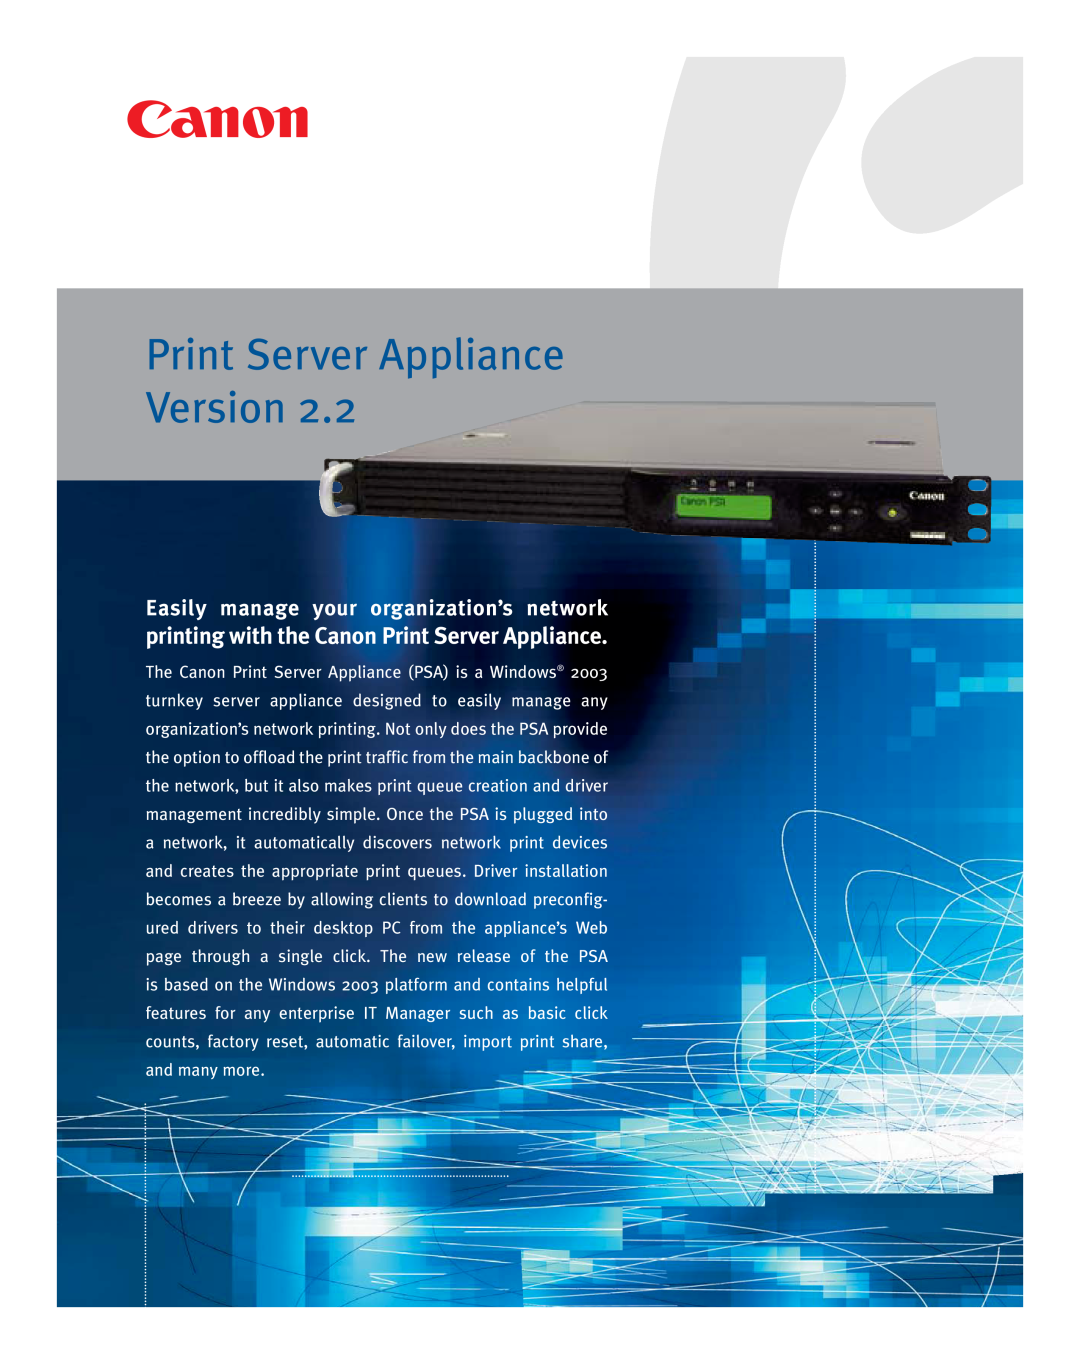 Canon 2.2 manual Print Server Appliance Version, printing with the Canon Print Server Appliance 